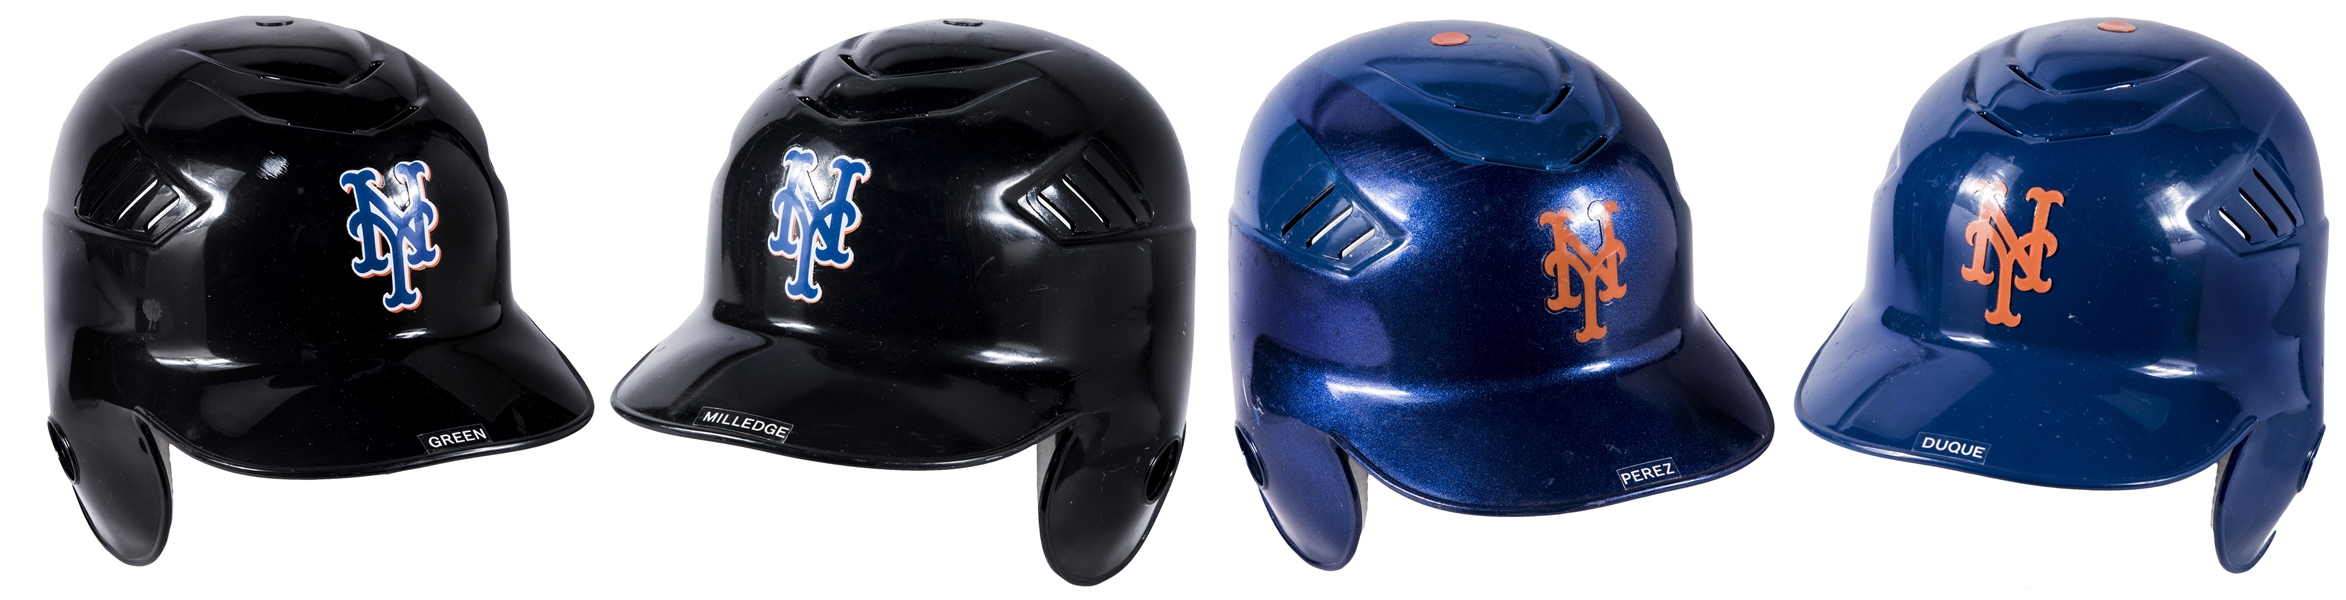 MLB mandates use of new, stronger batting helmets in 2013 